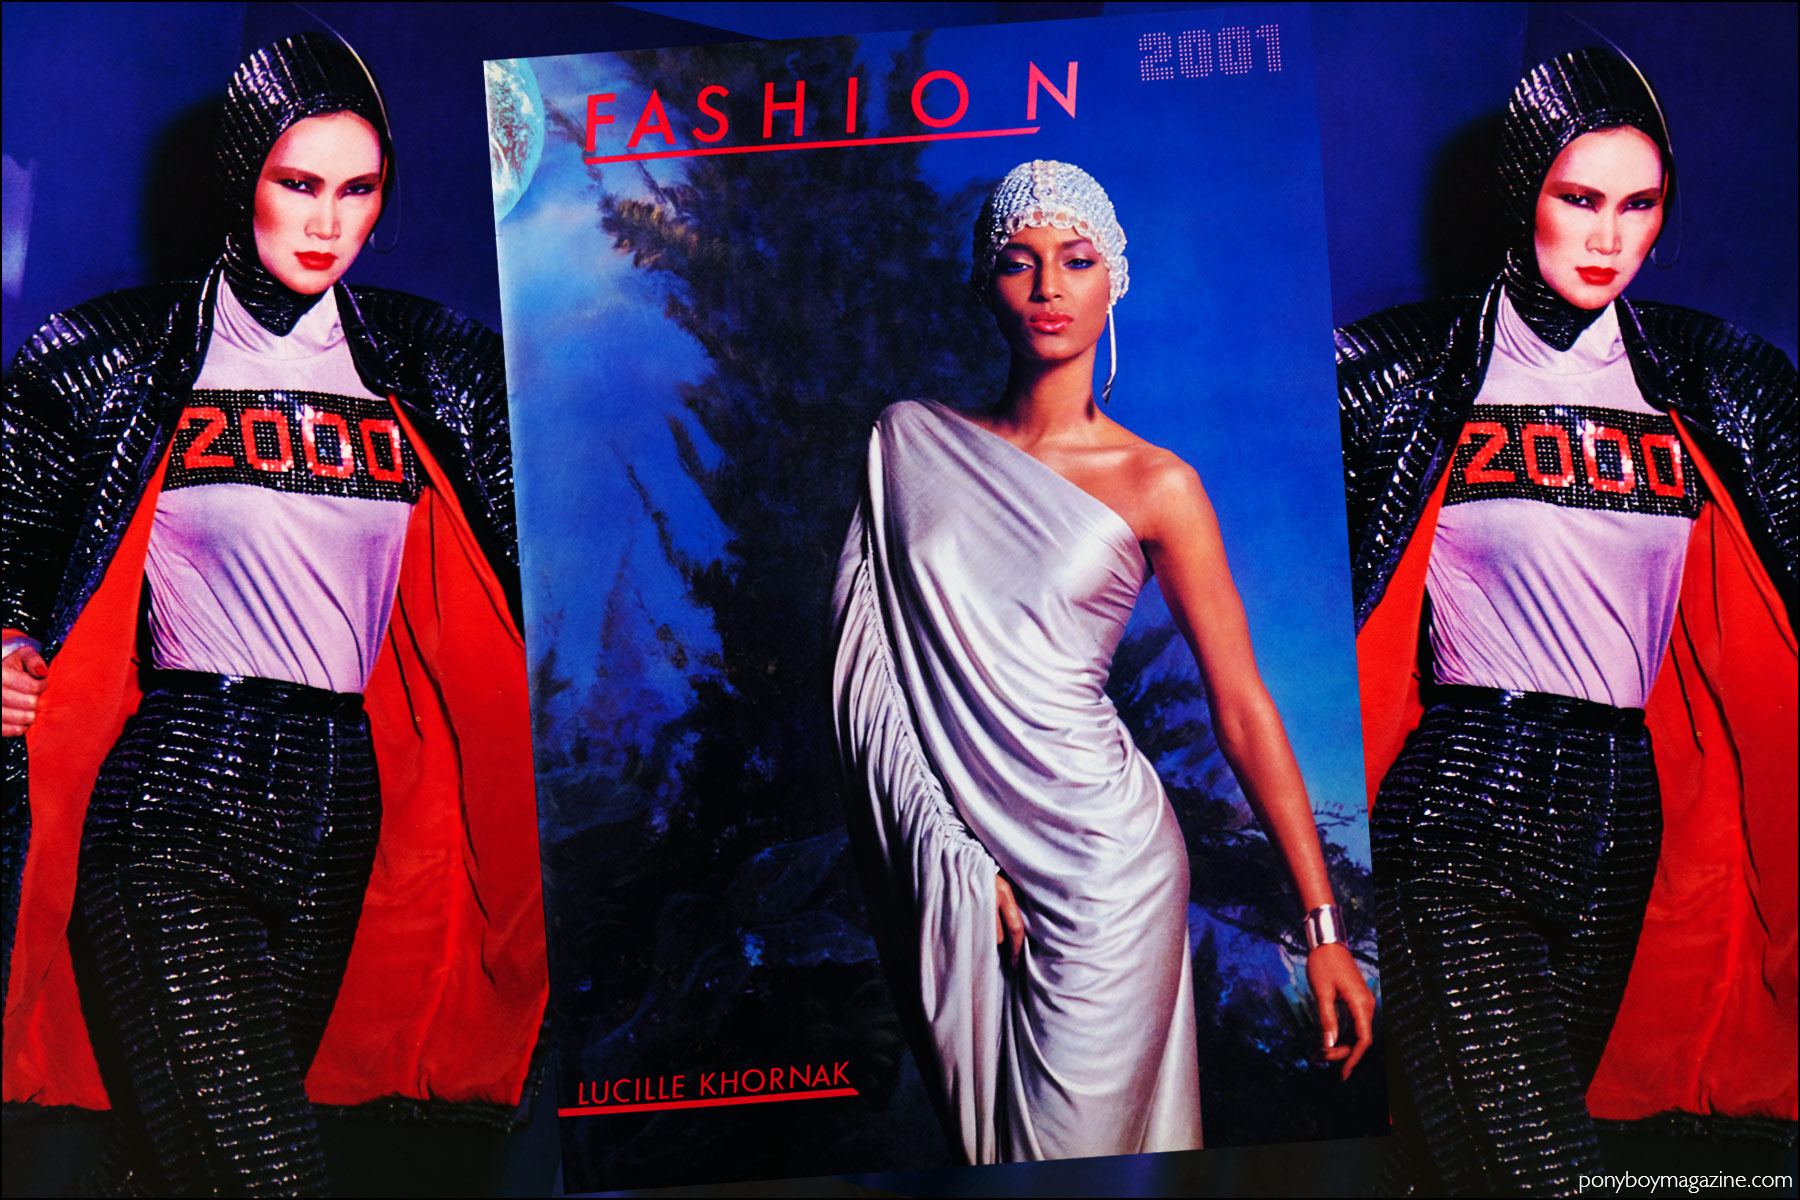 Fashion: 2001 by Lucille Khornak. Ponyboy magazine.